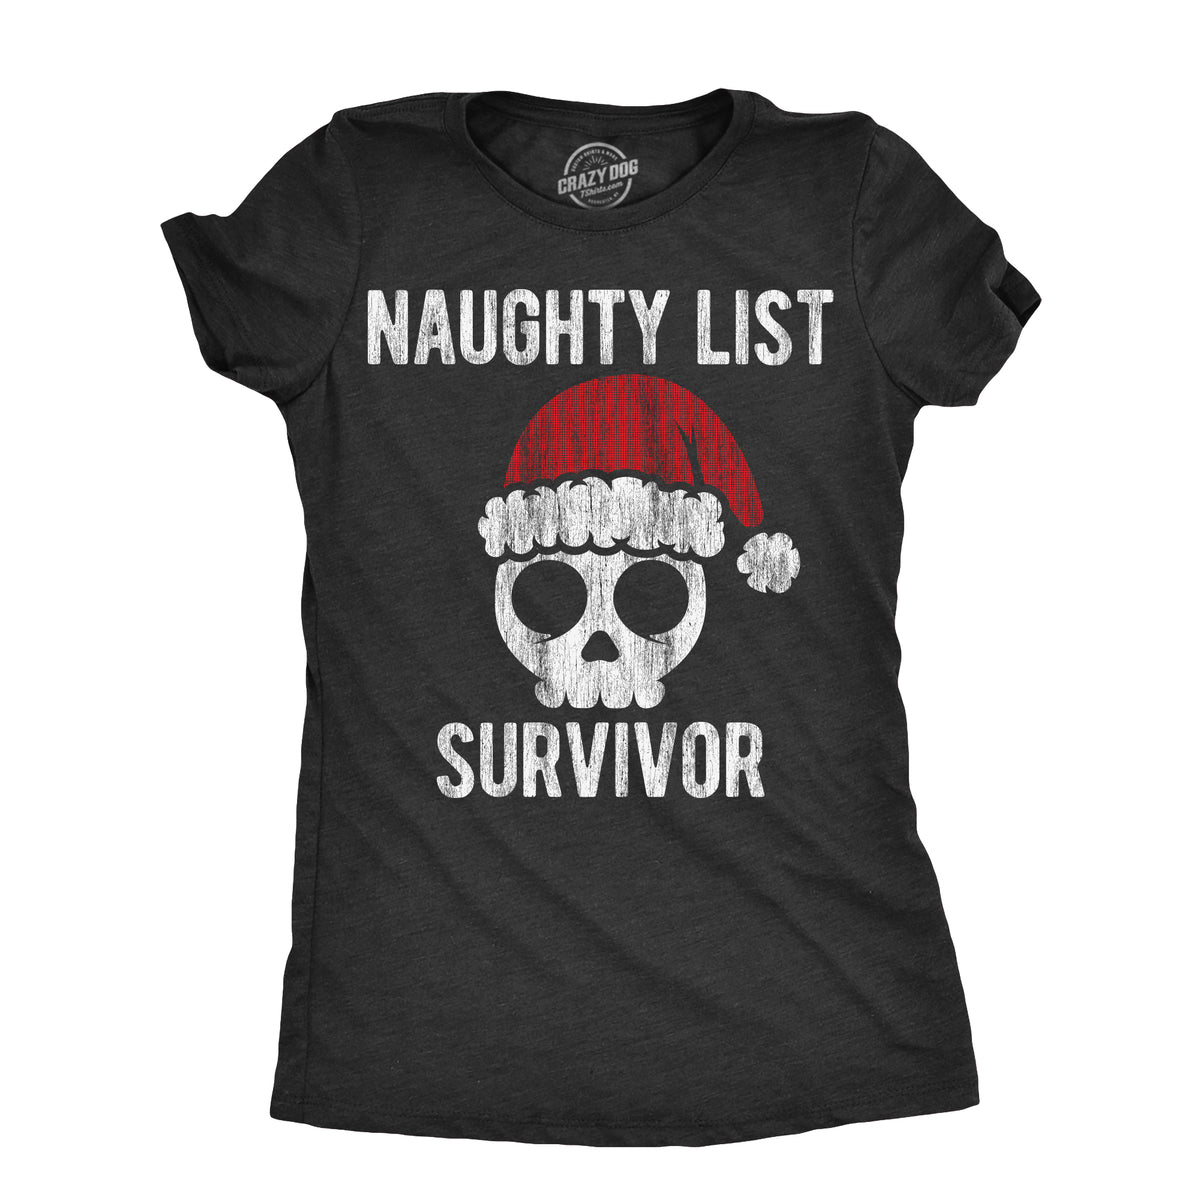 Funny Heather Navy - SURVIVOR Naughty List Survivor Womens T Shirt Nerdy Christmas sarcastic Tee